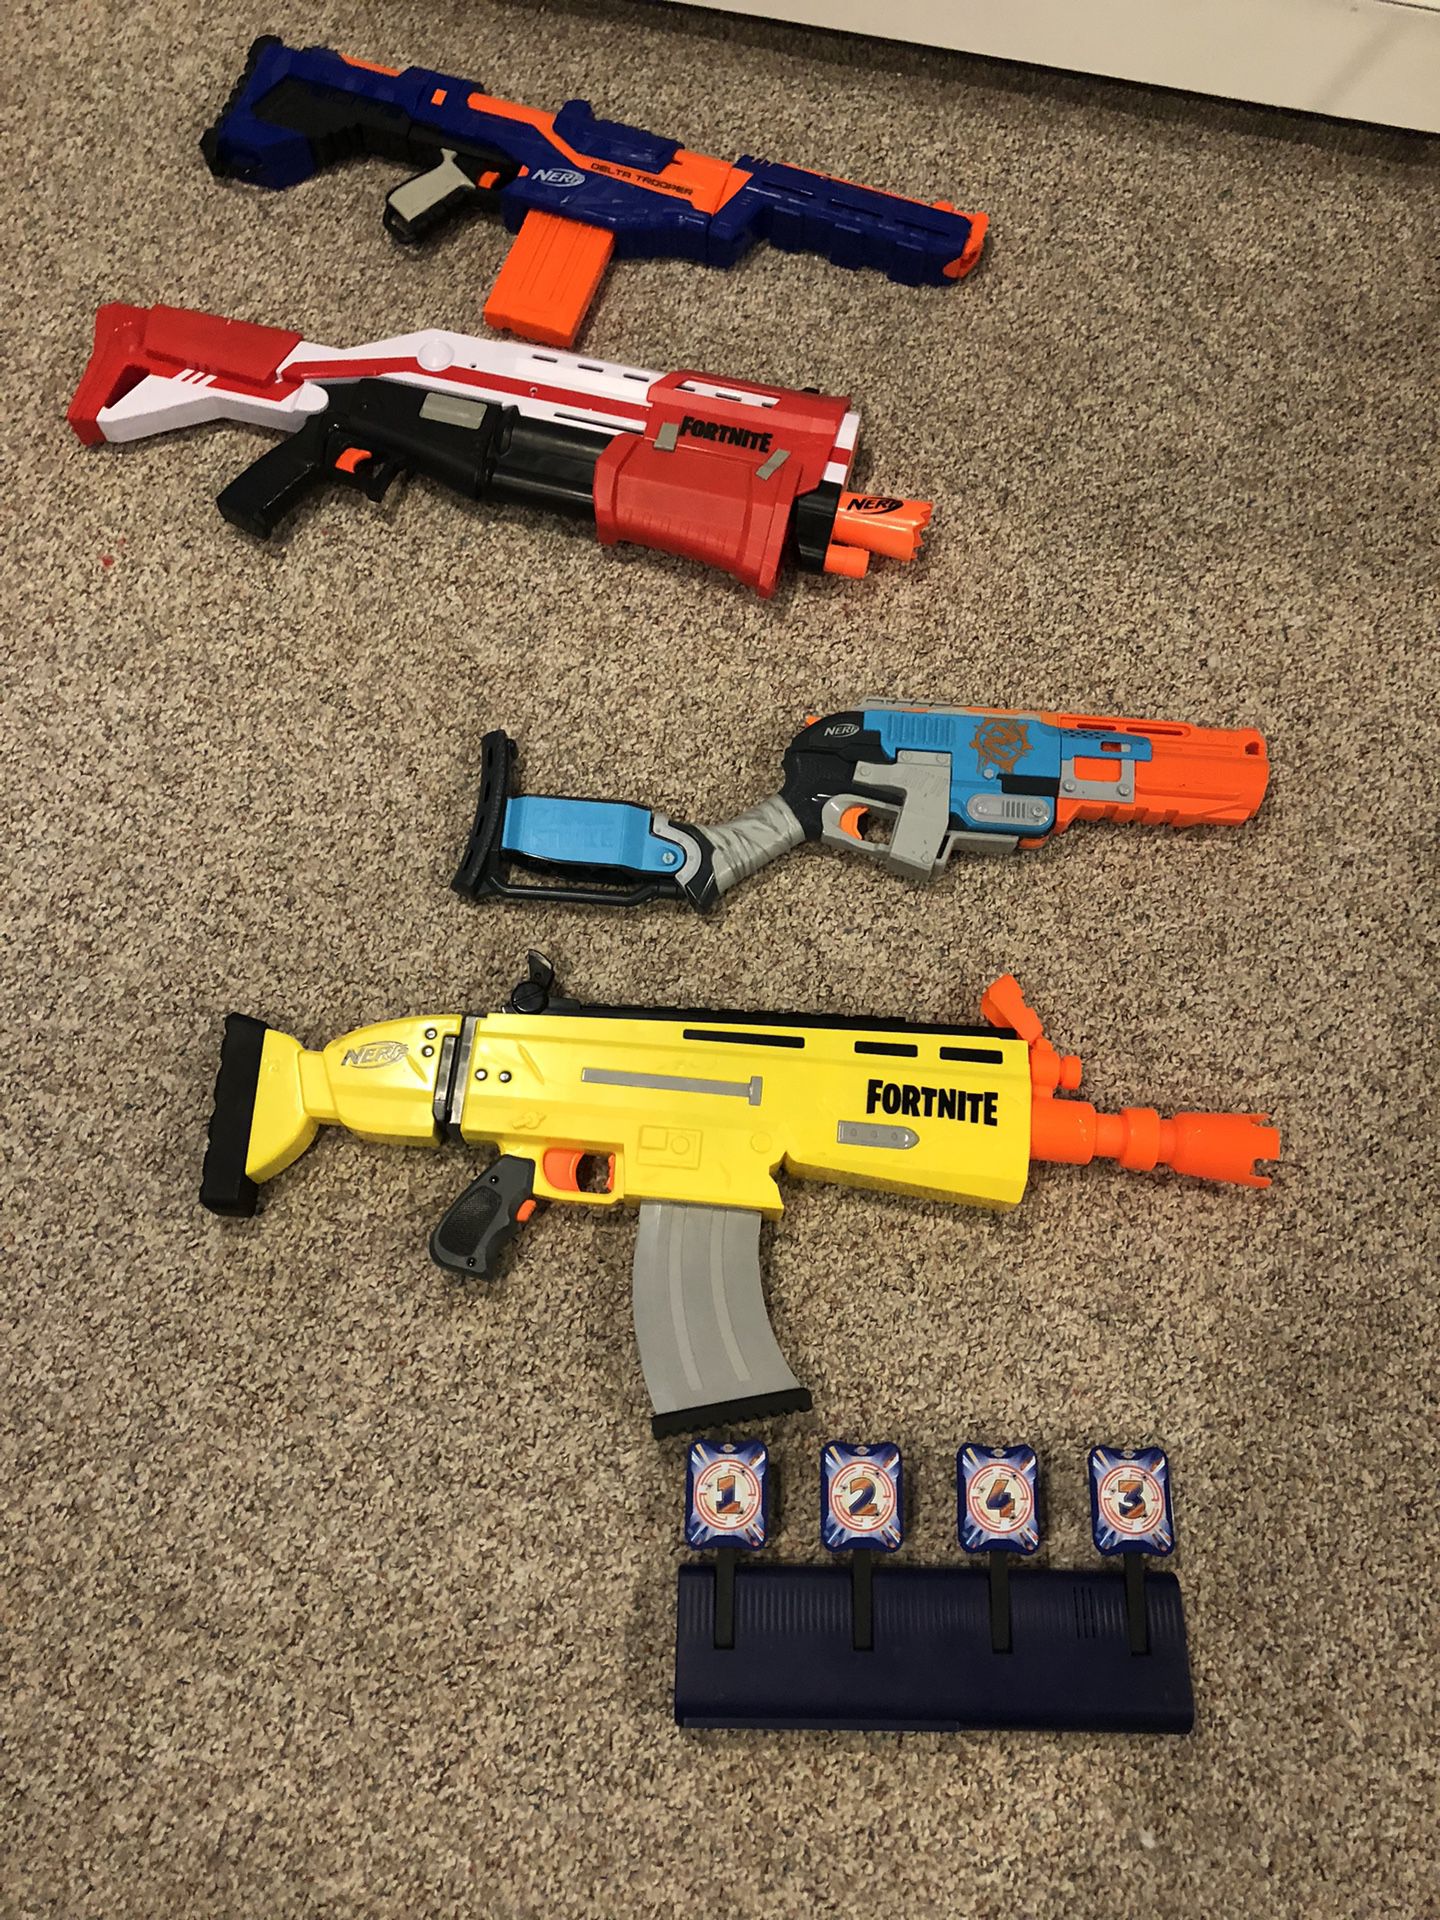 Nerf Guns and Target 